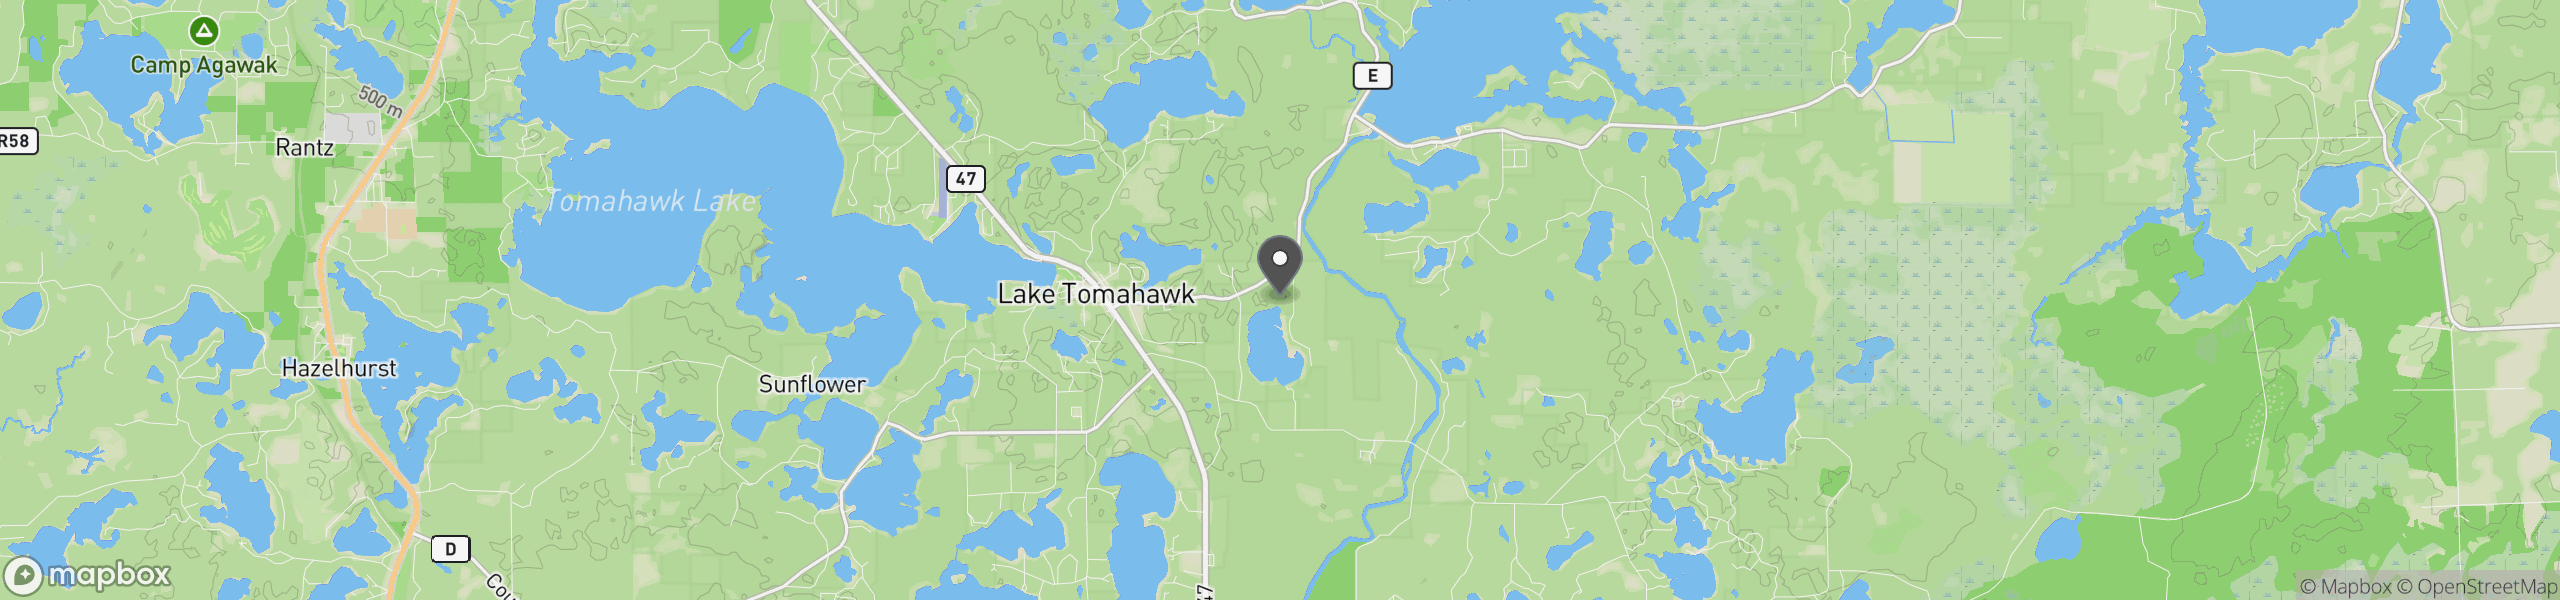 Lake Tomahawk, WI